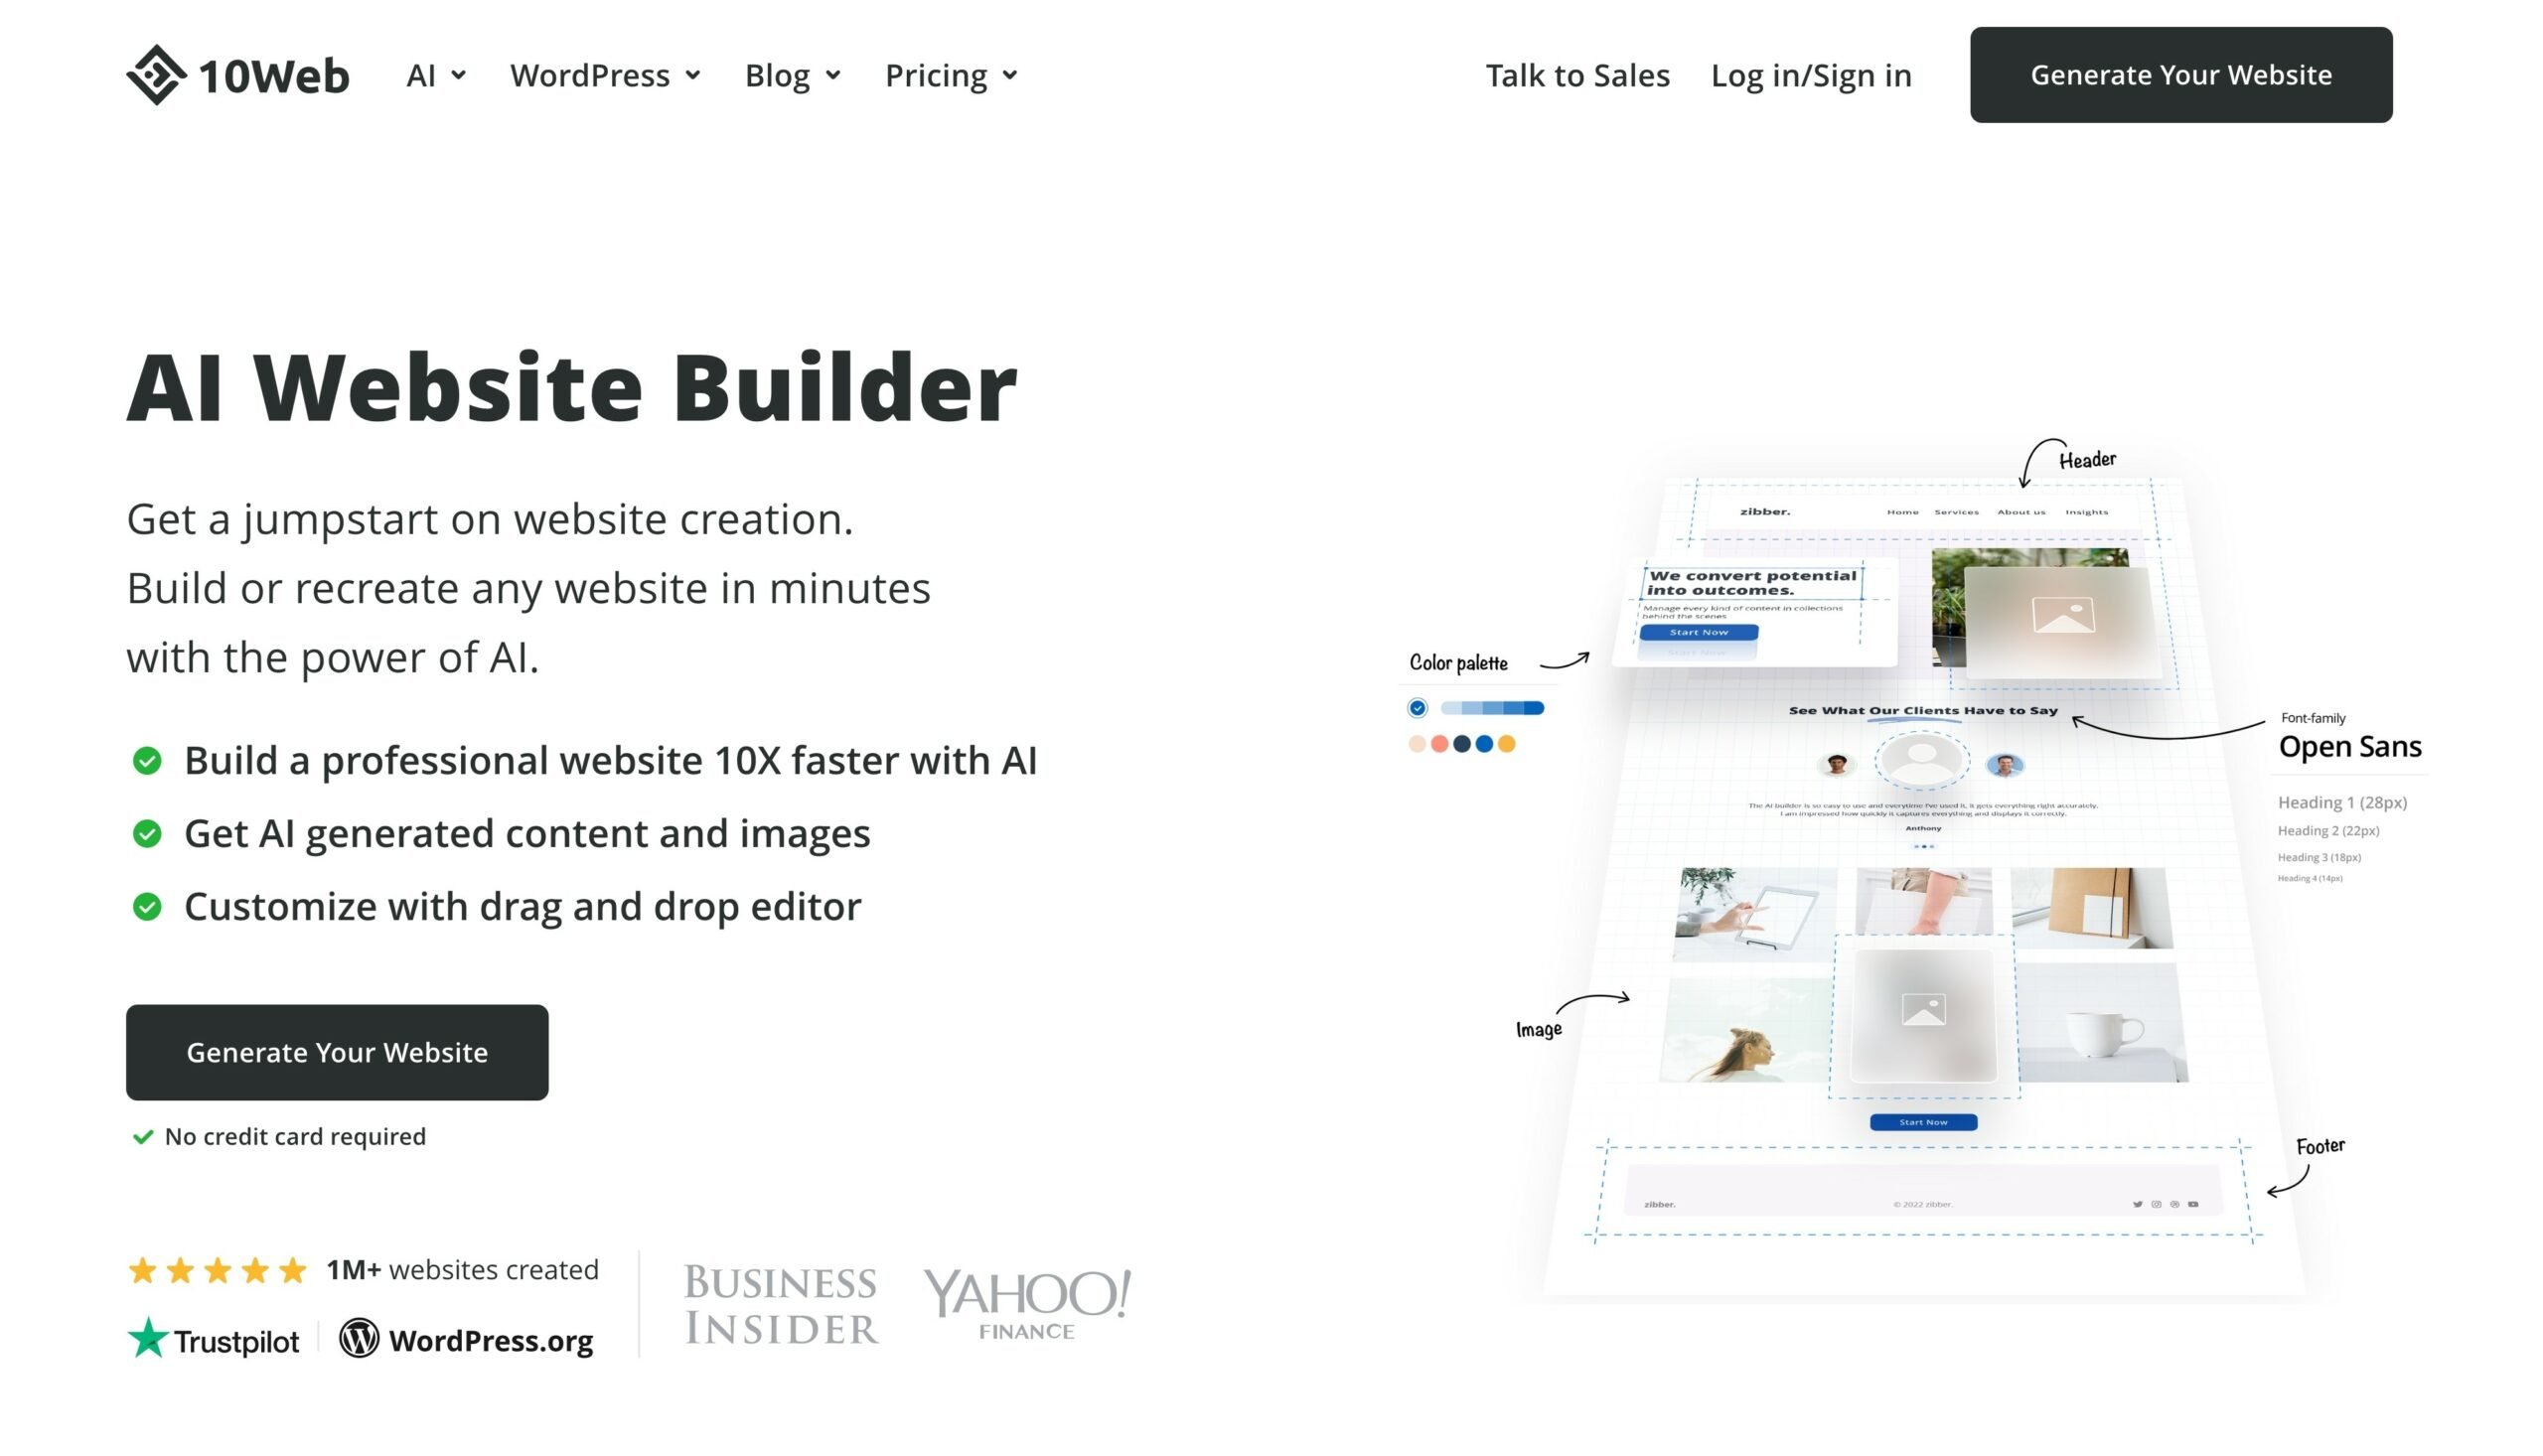 Our Favorite WordPress Theme/Visual Page Builder: Divi - TechBear